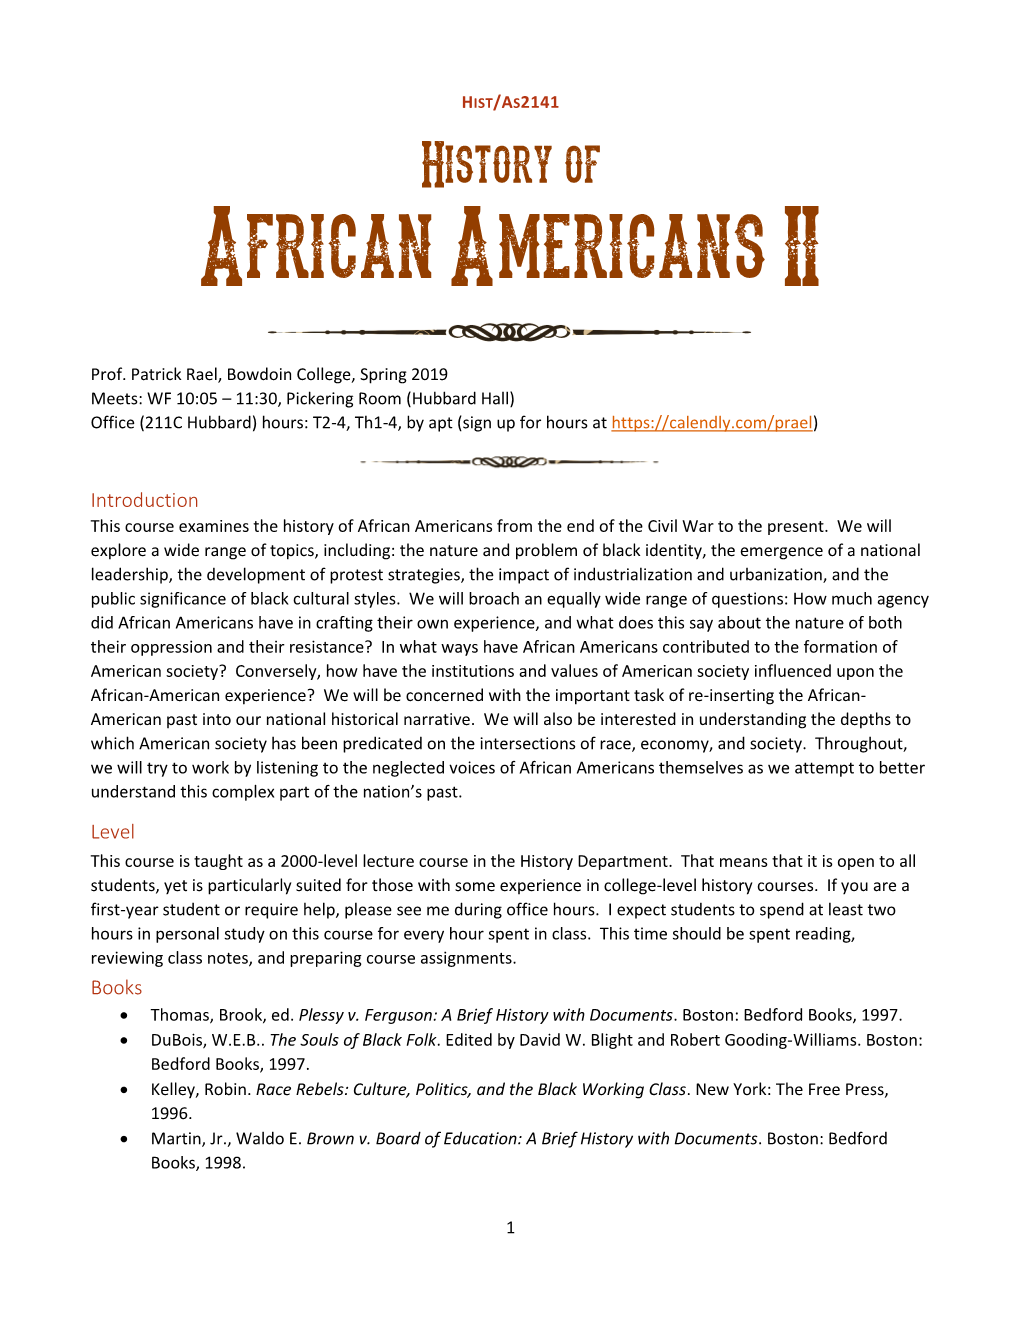 African Americans II